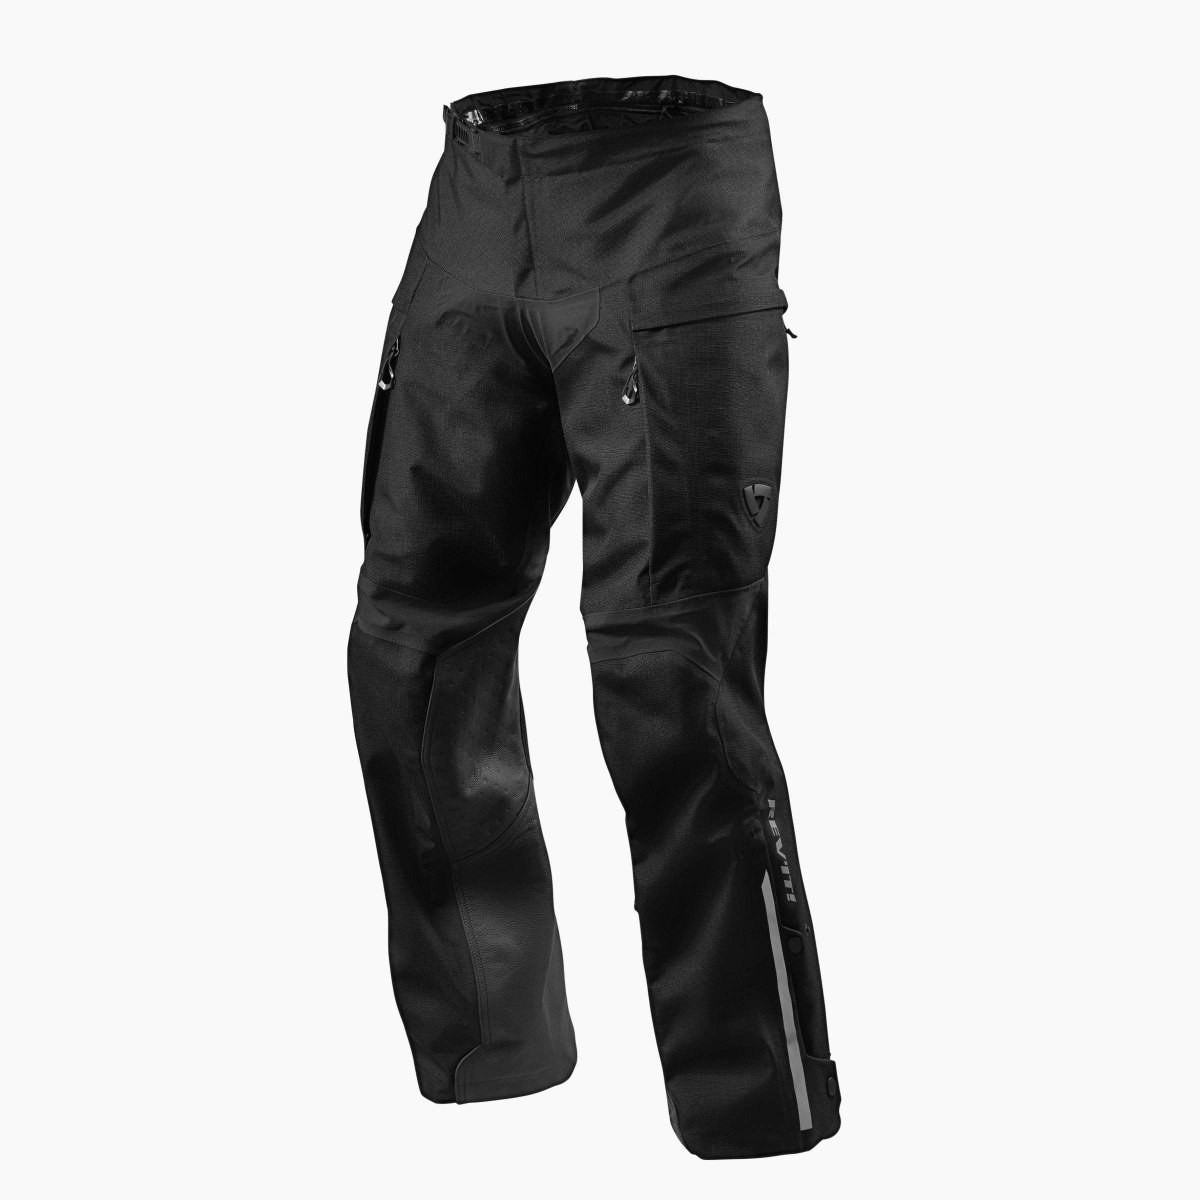 Image of REV'IT! Component H2O Standard Black Motorcycle Pants Size 4XL EN